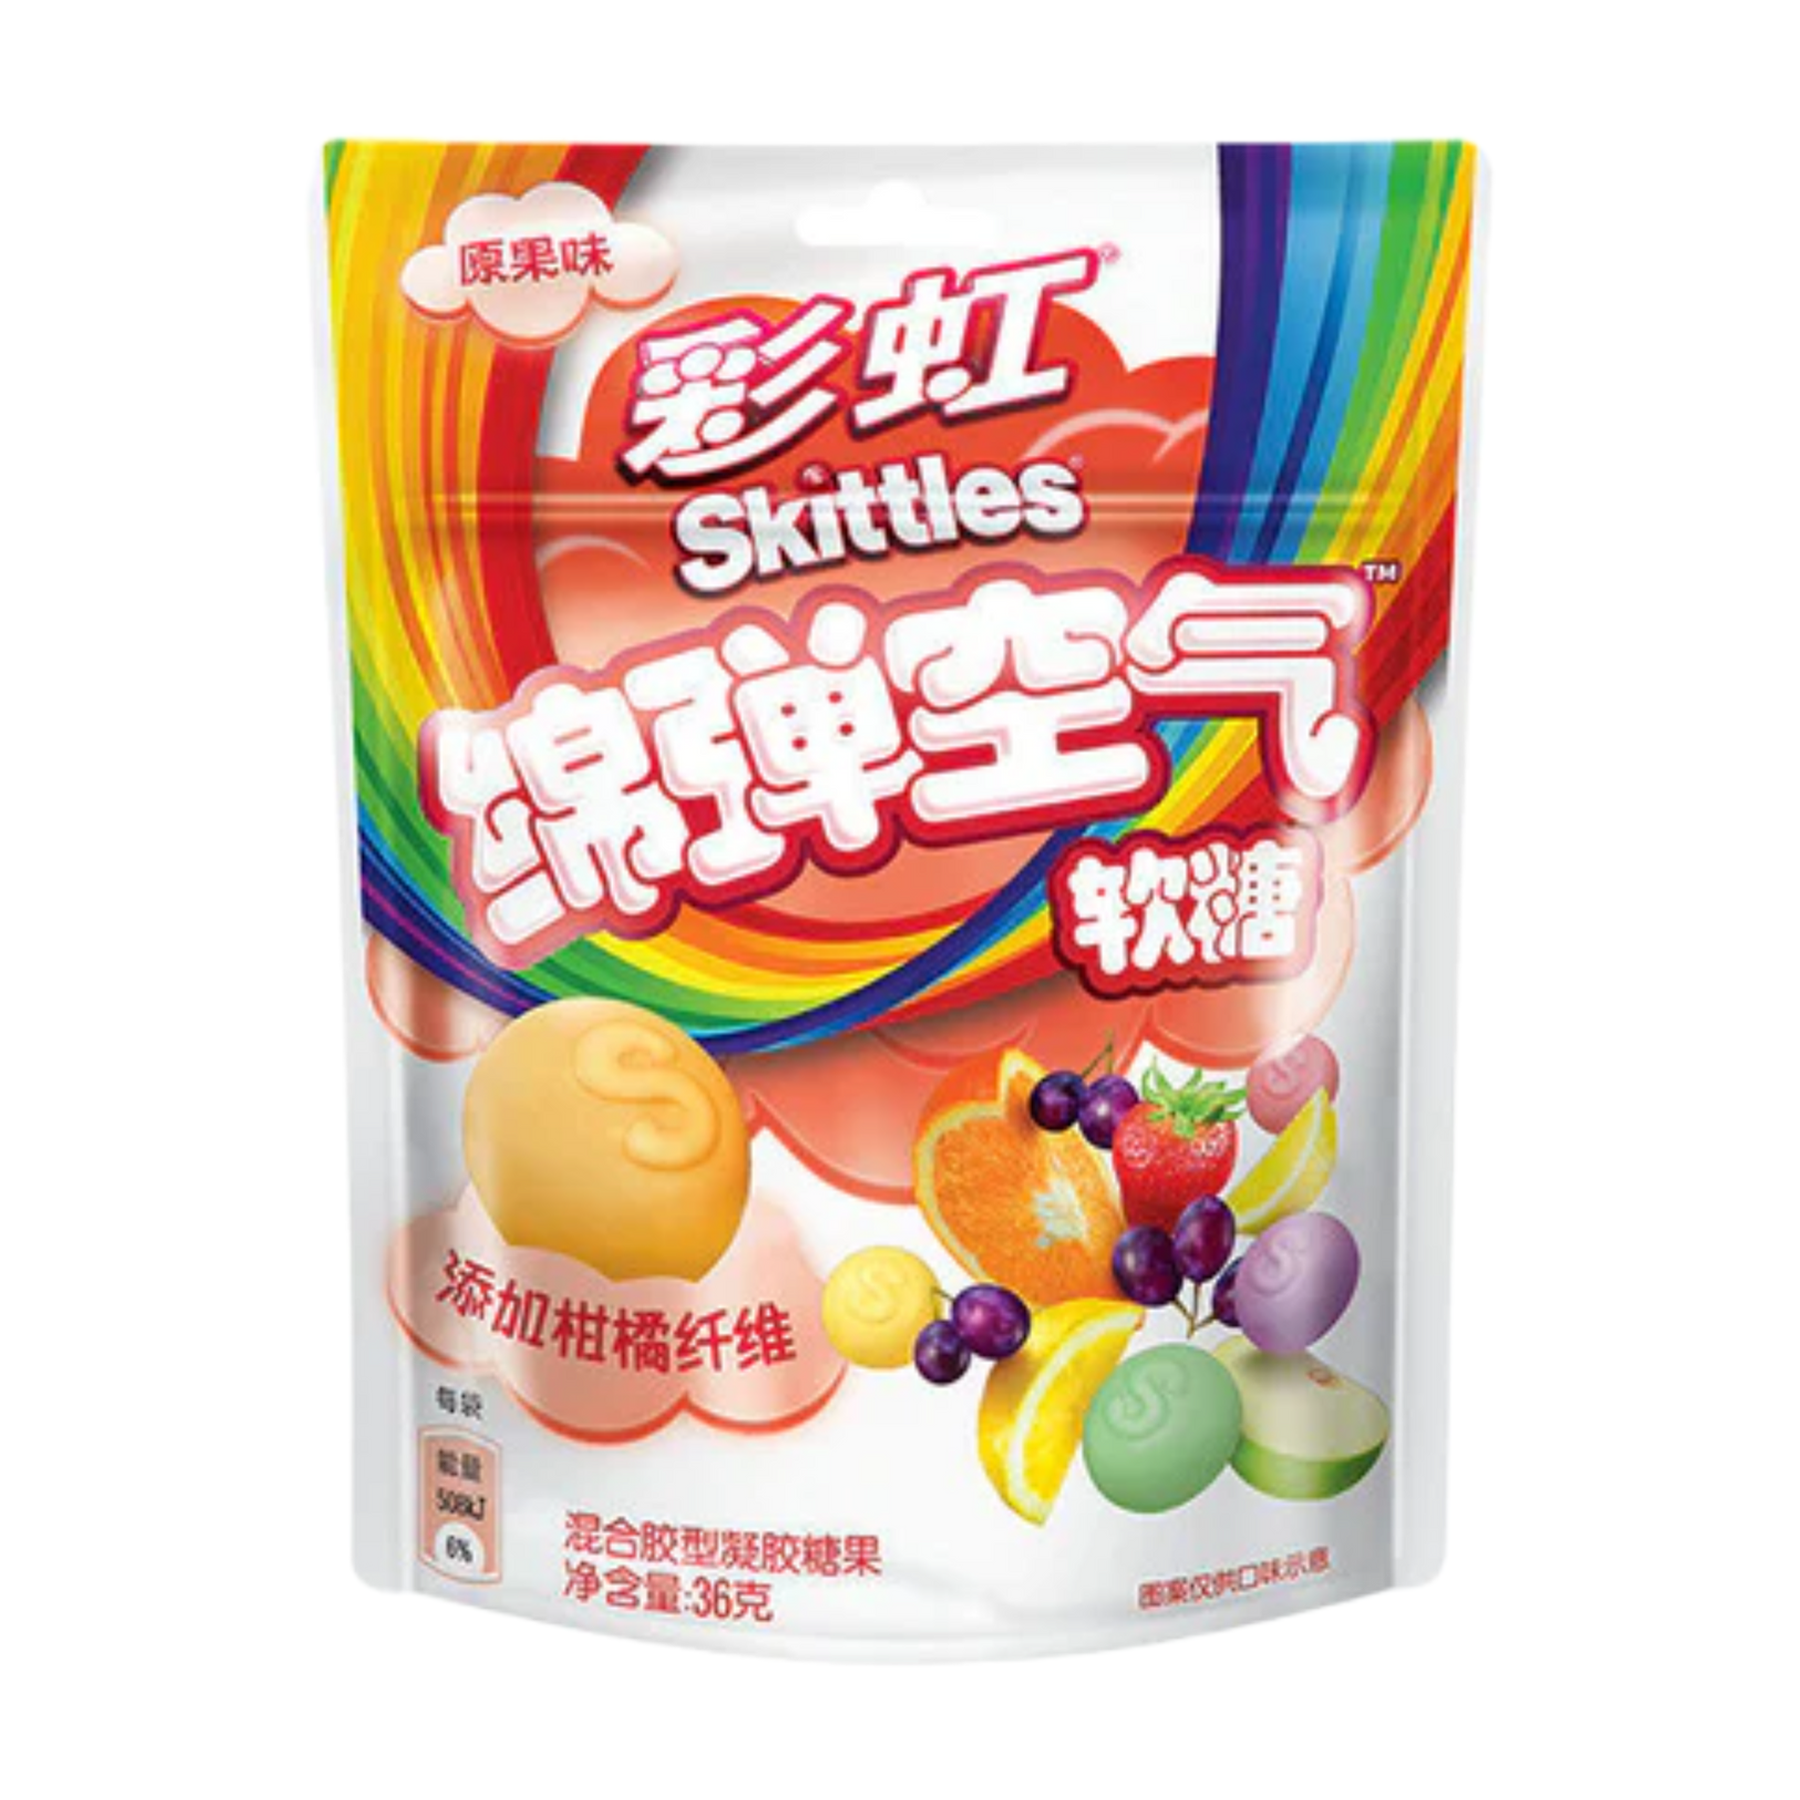 Skittles White Cloud Fruit Mix